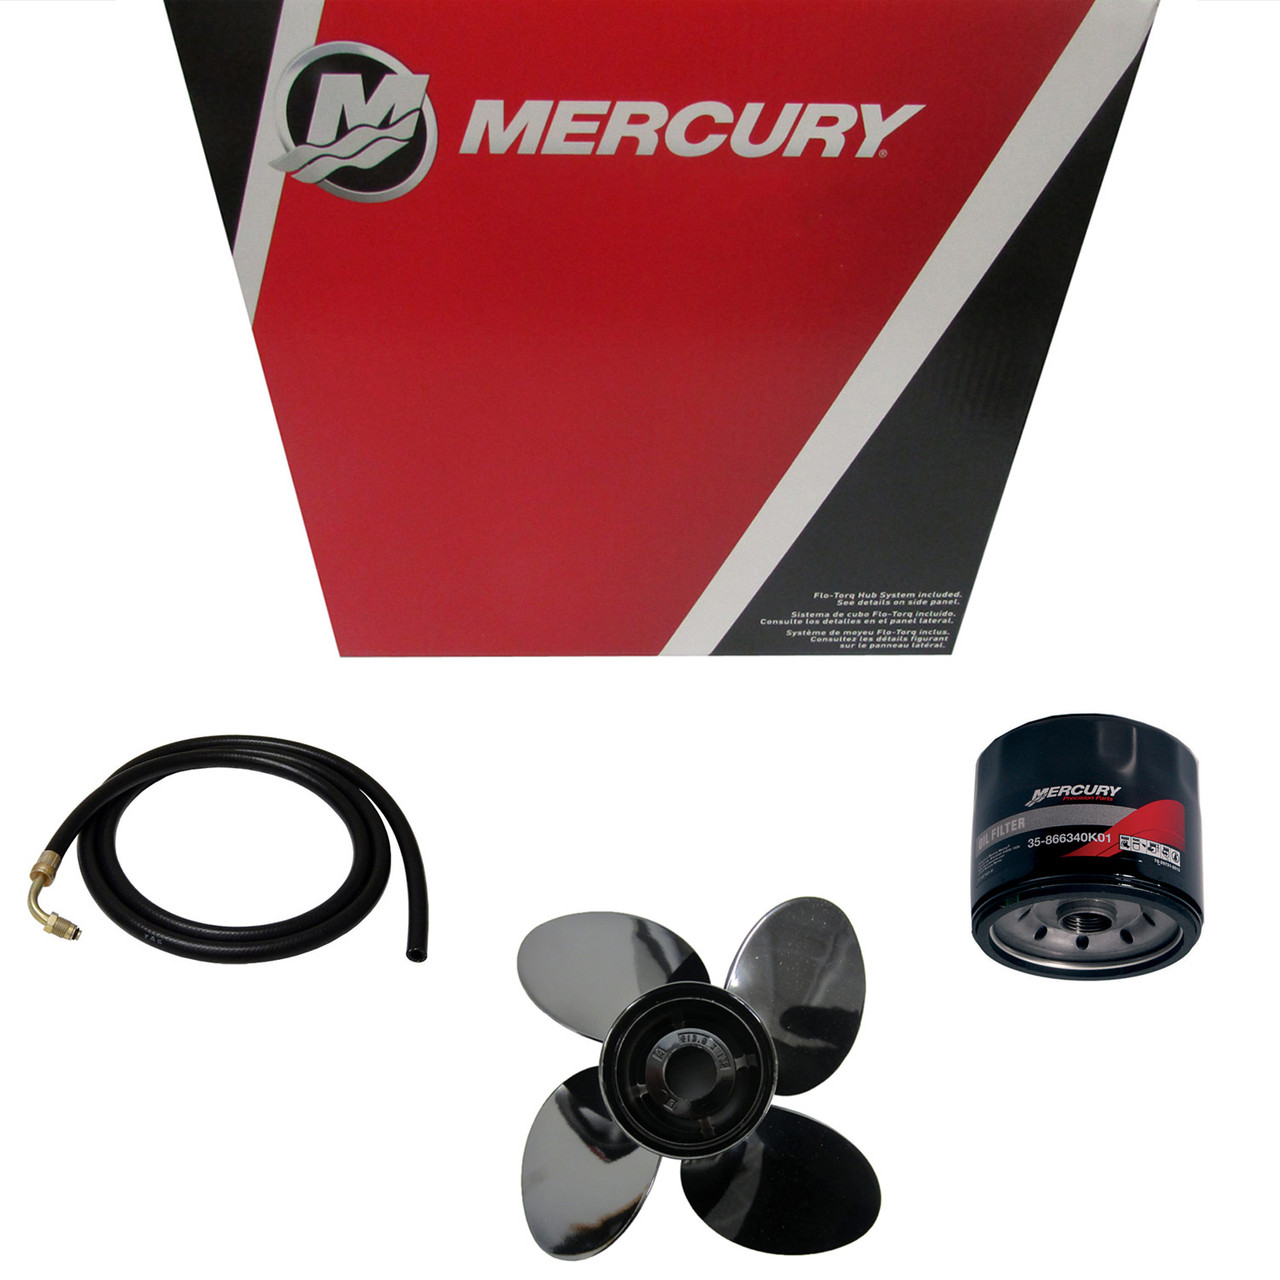 Mercury Marine / Mercruiser New OEM Tool, 91-877840A1